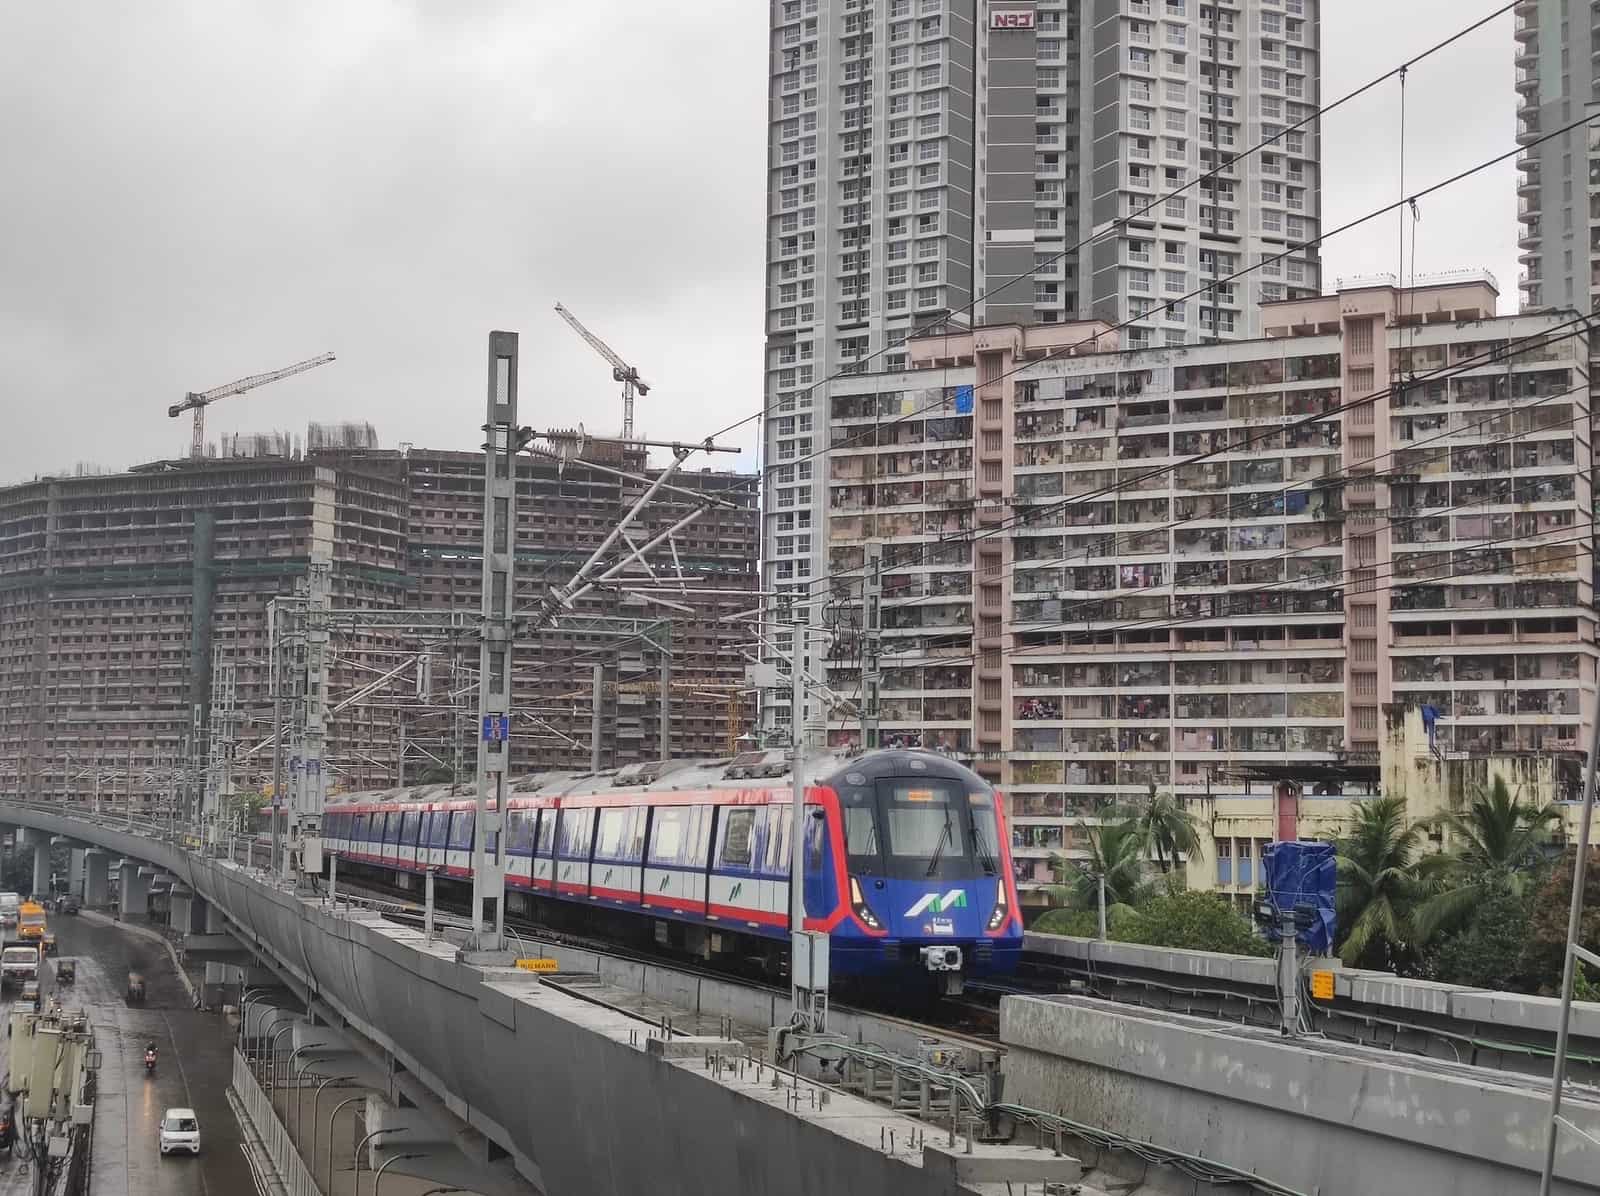 Mumbai Metro Rail Lines: Country of Origin